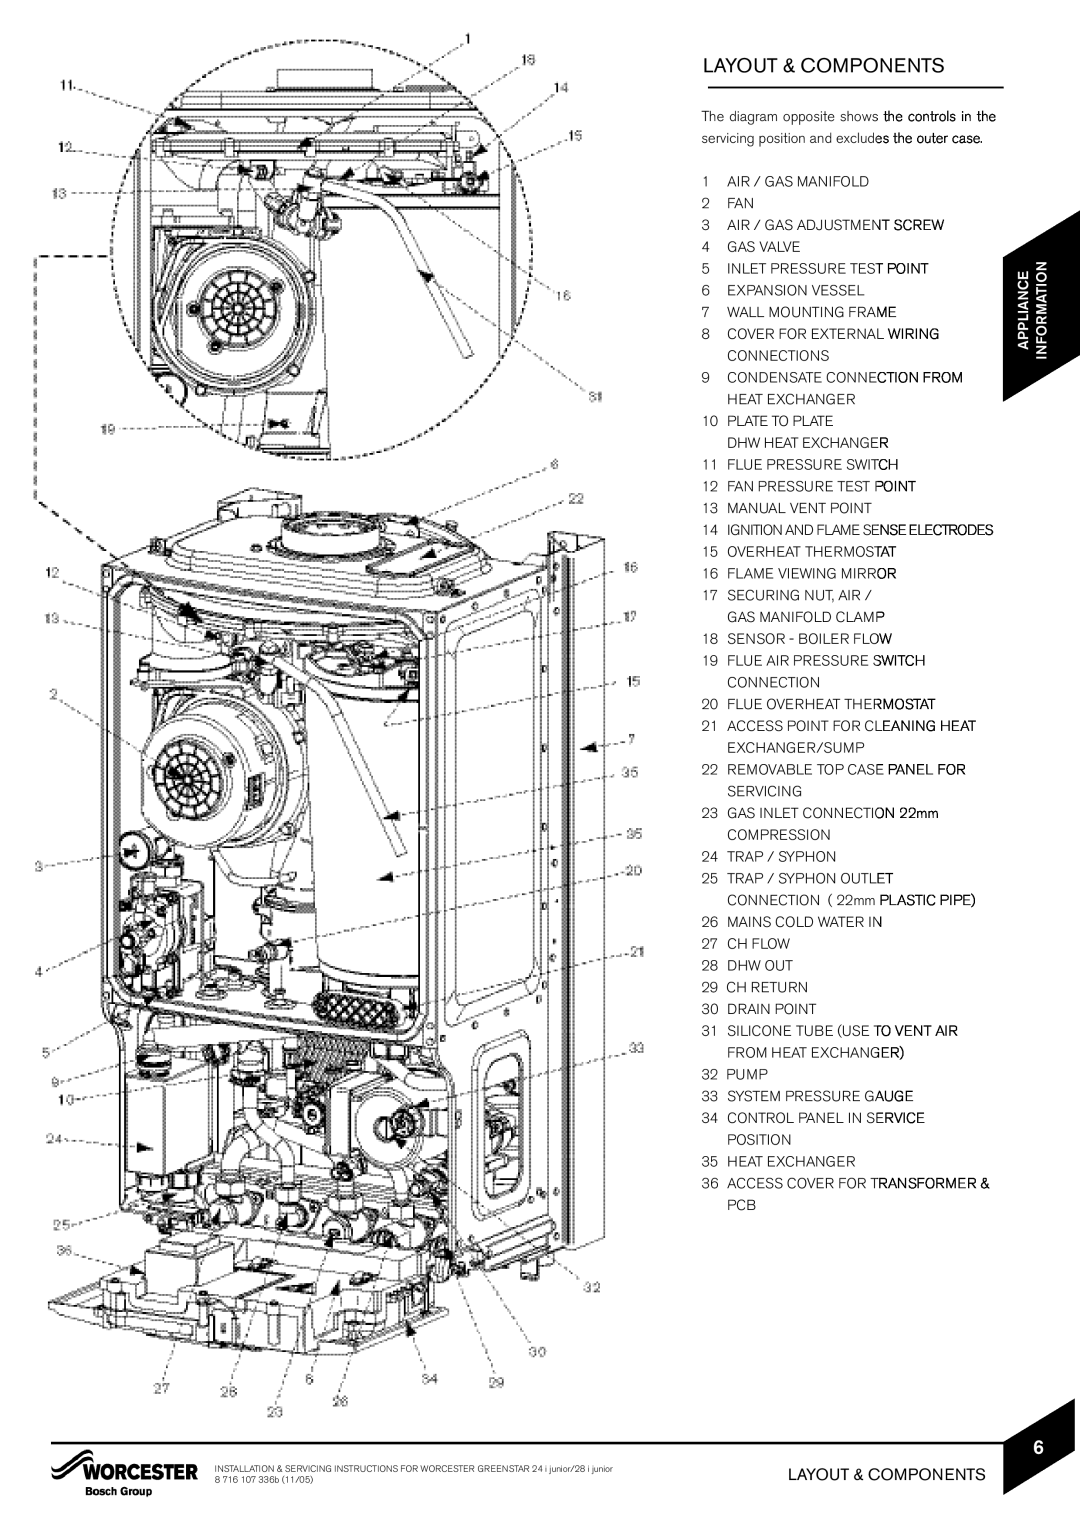 Bosch Appliances 24i junior, 28i junior manual Layout & Components, Appliance, Information 